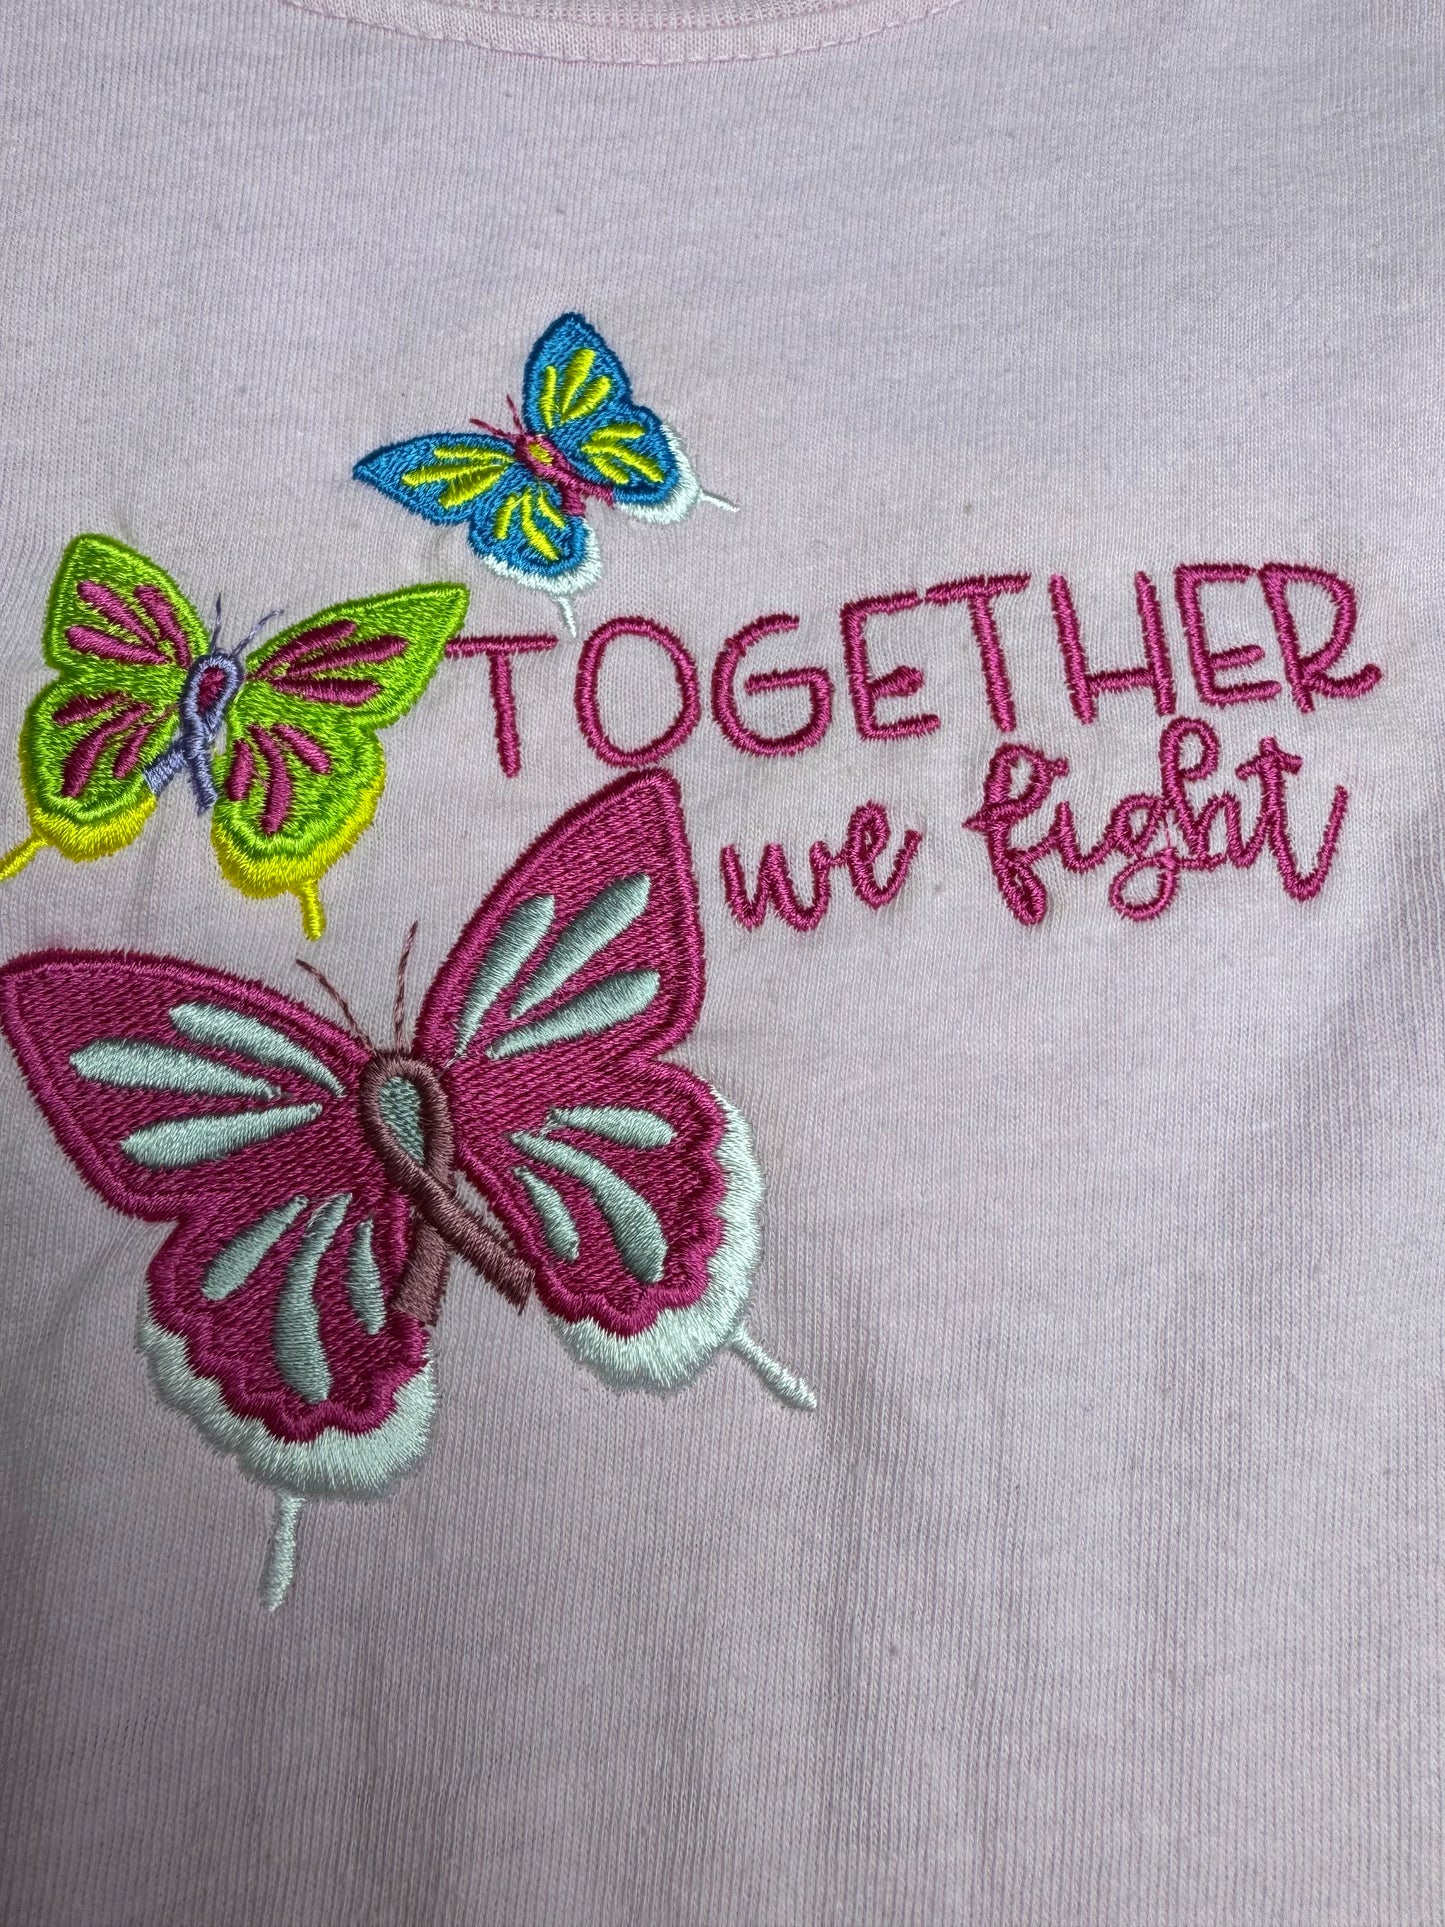 Cancer Awareness Embroidered Shirt